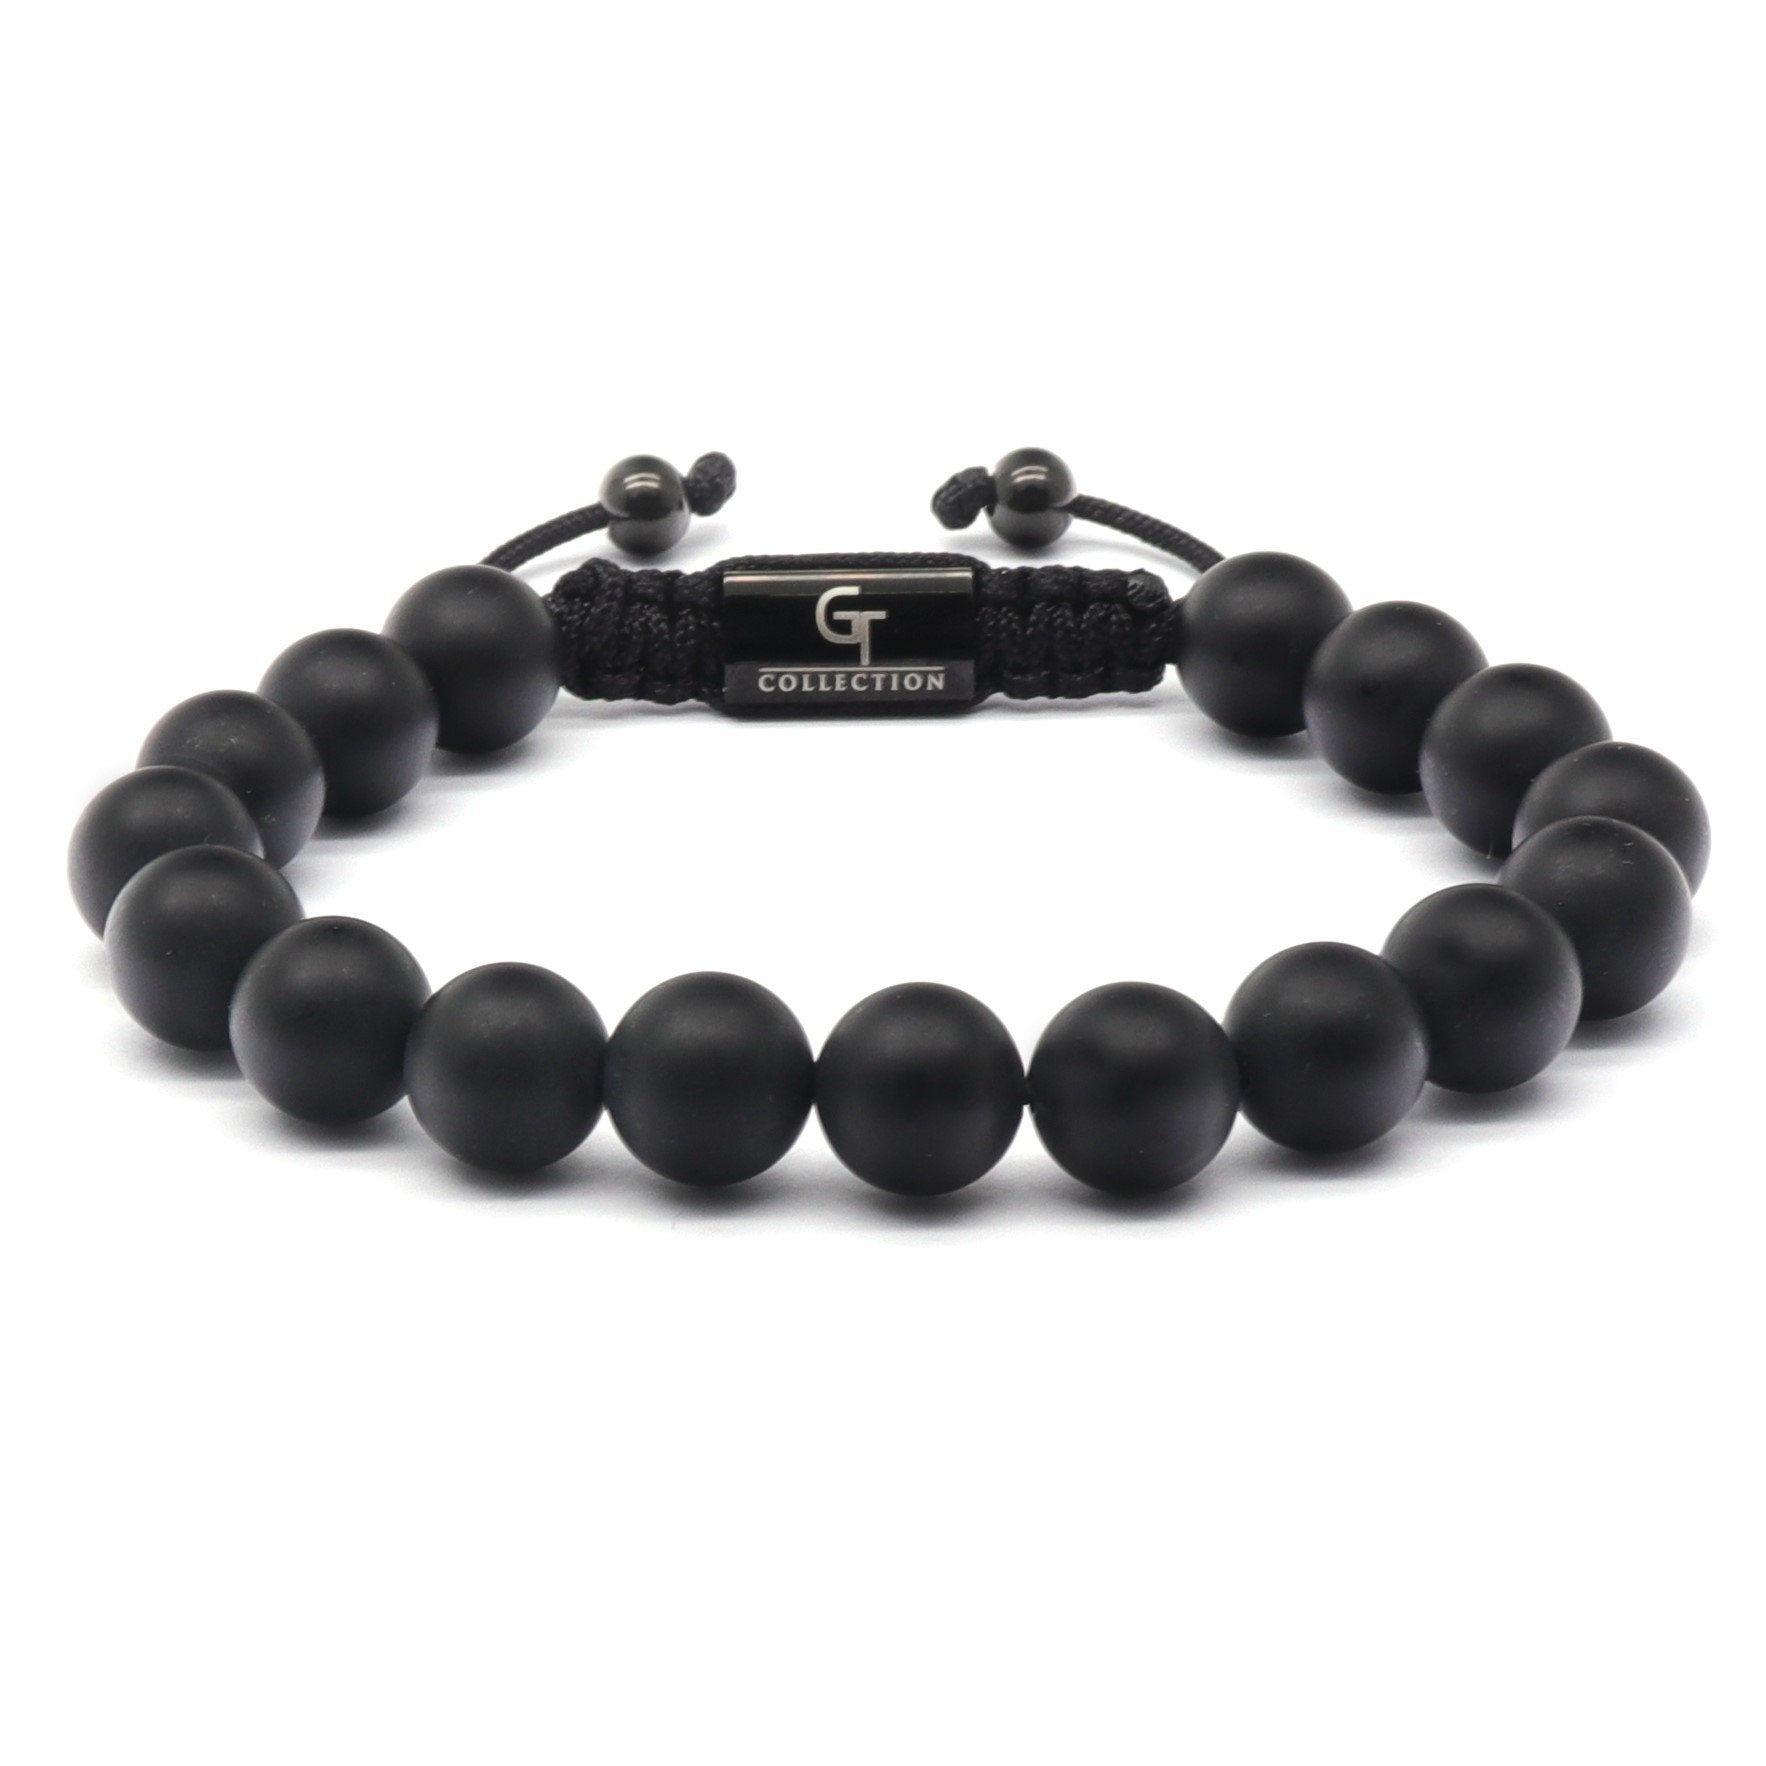 8 mm Black Onyx Chakra Gemstone Bracelet (Stretchy and Strong)